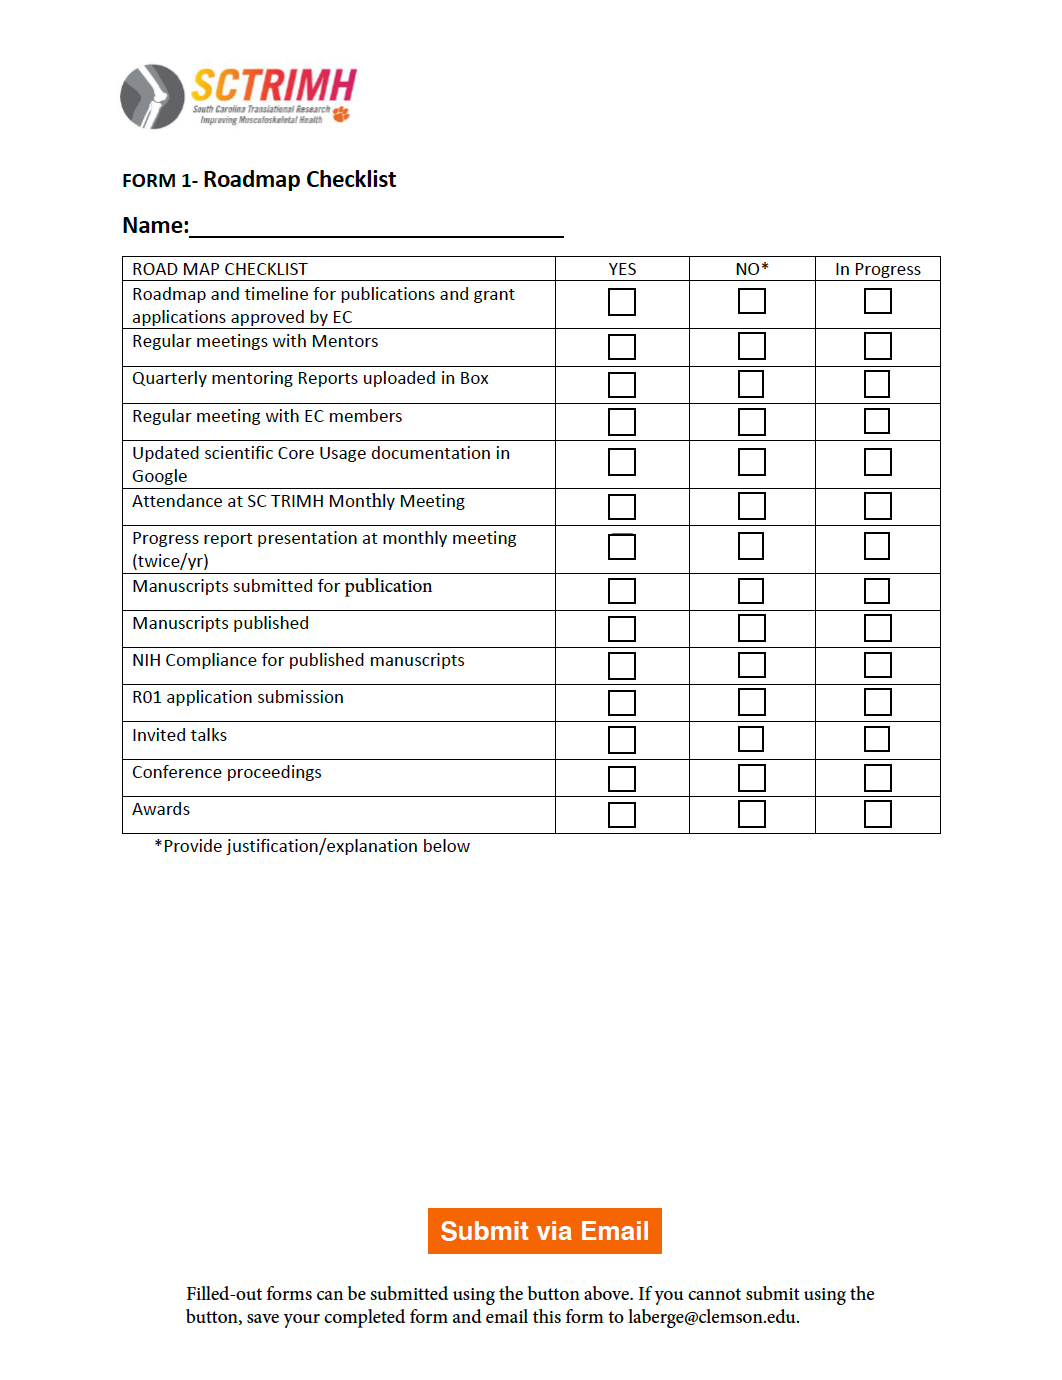 Roadmap checklist form